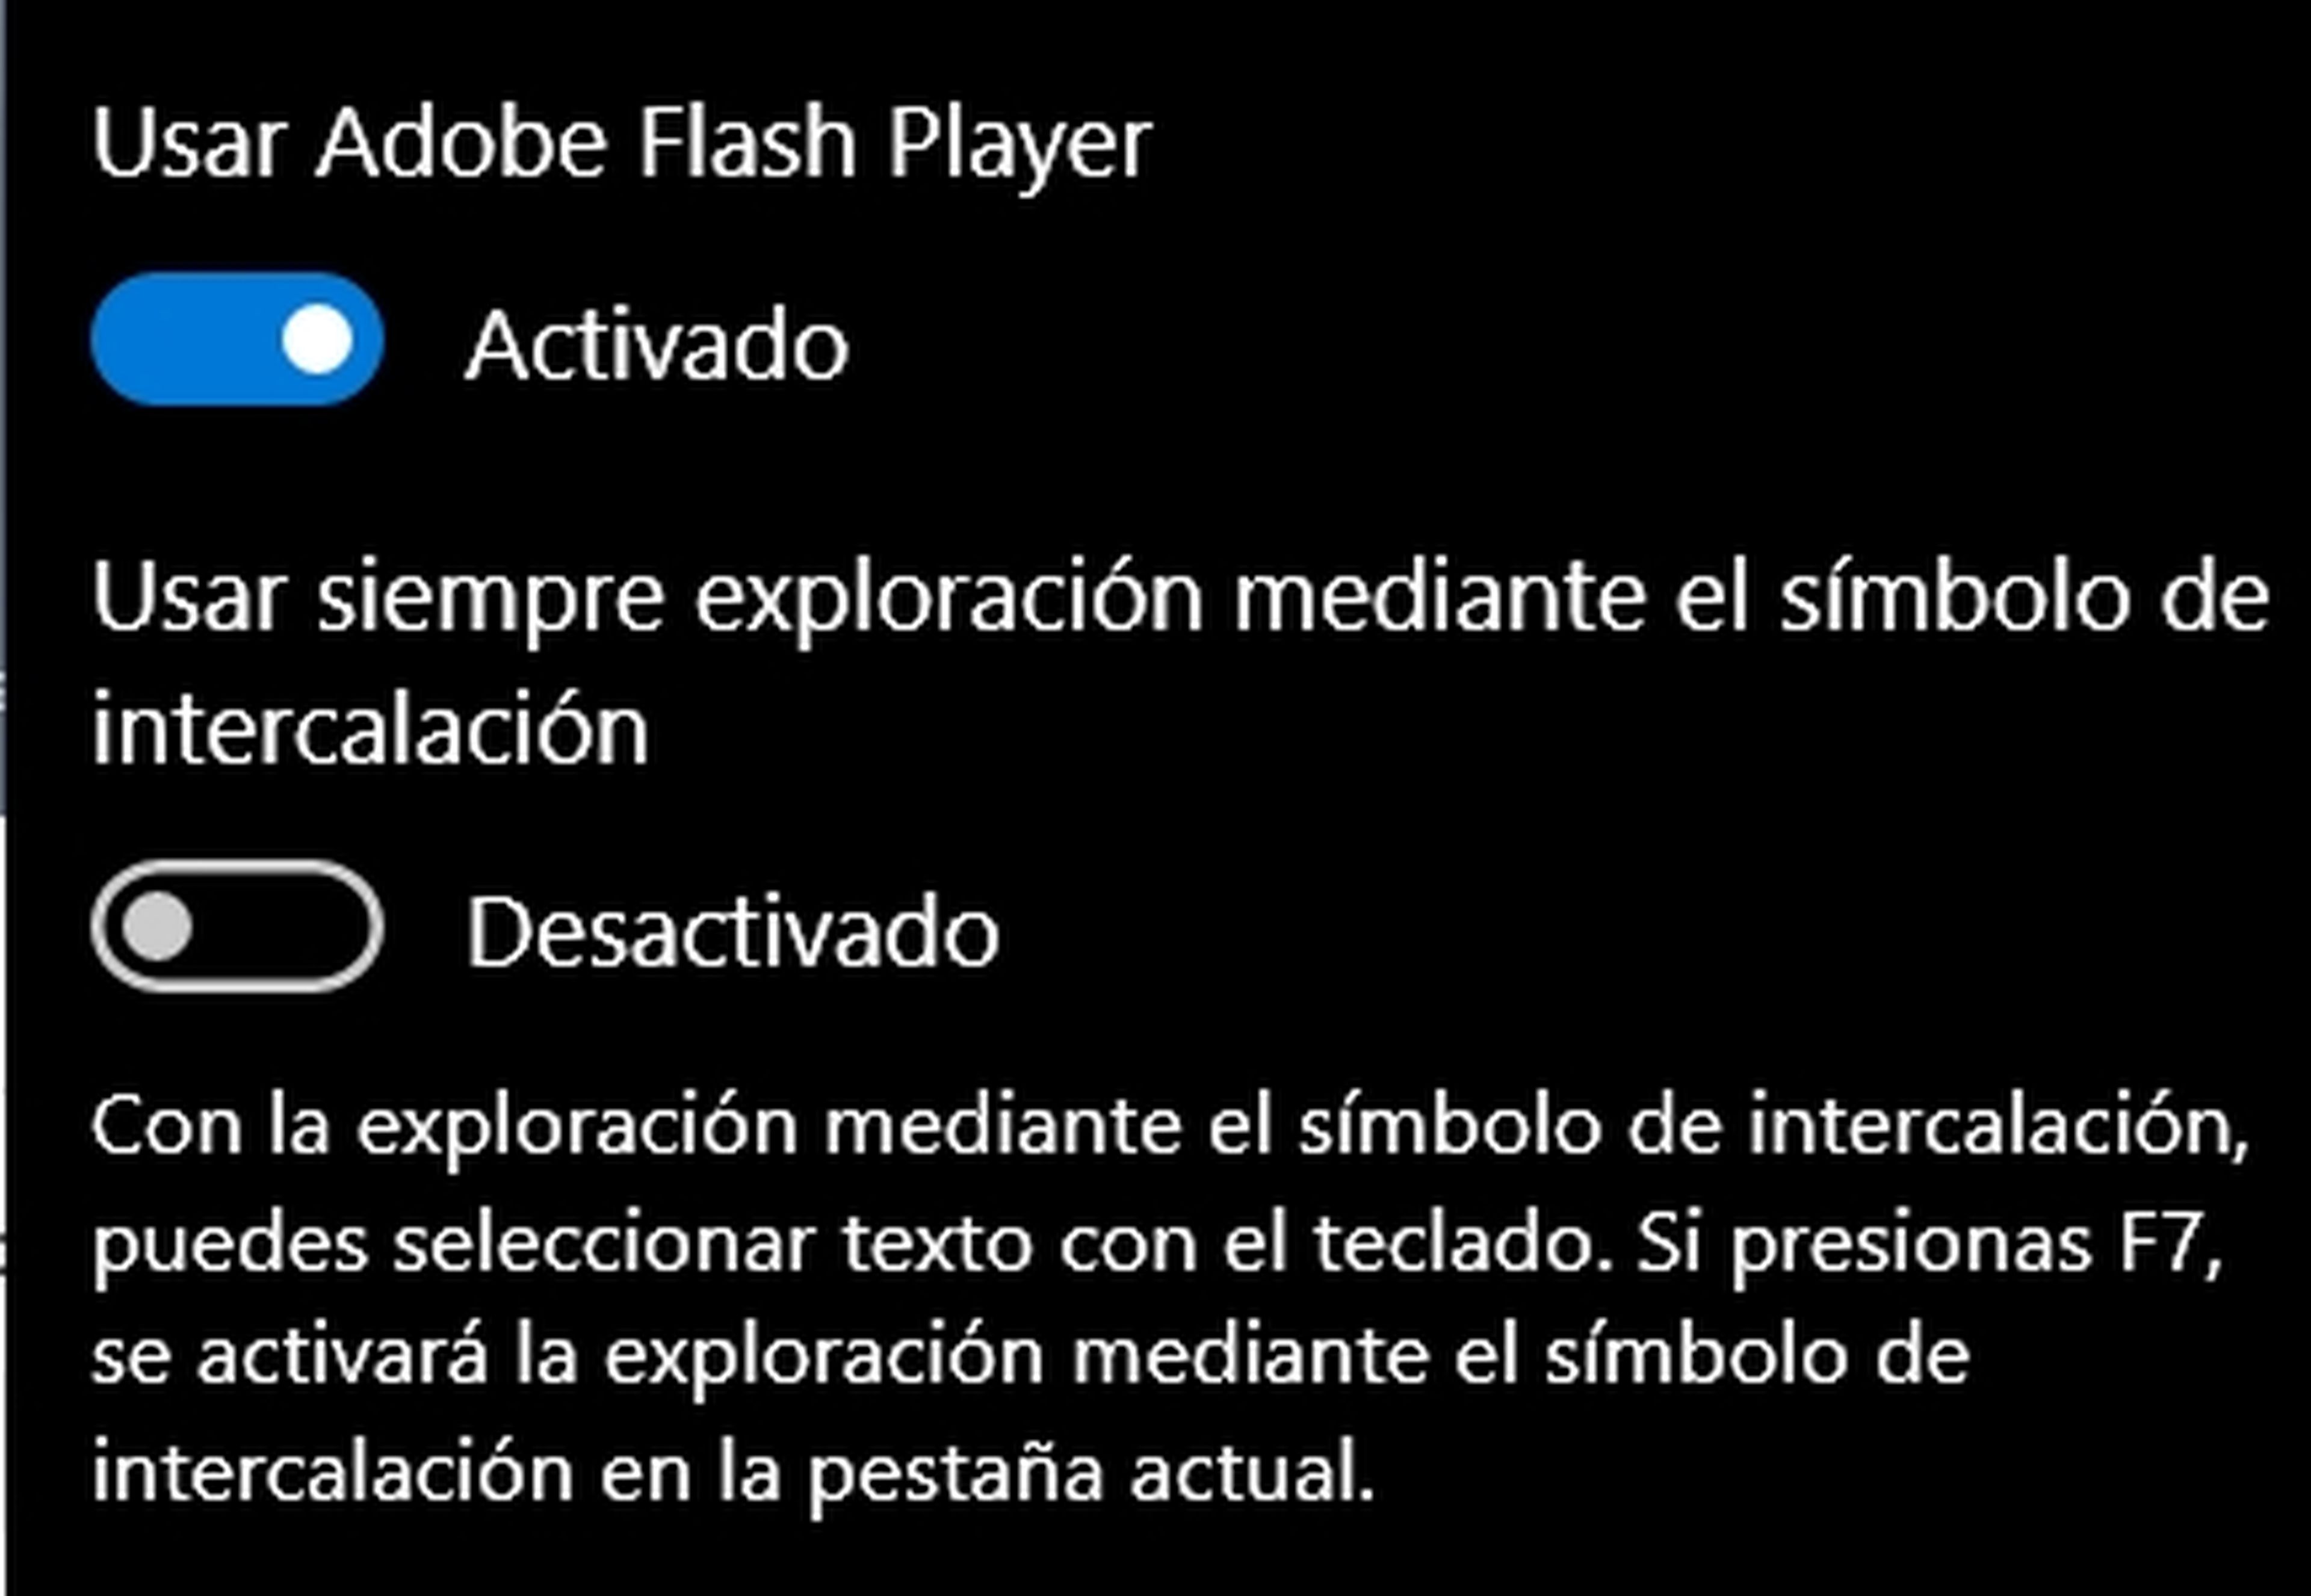 Amazon prohibe Adobe Flash